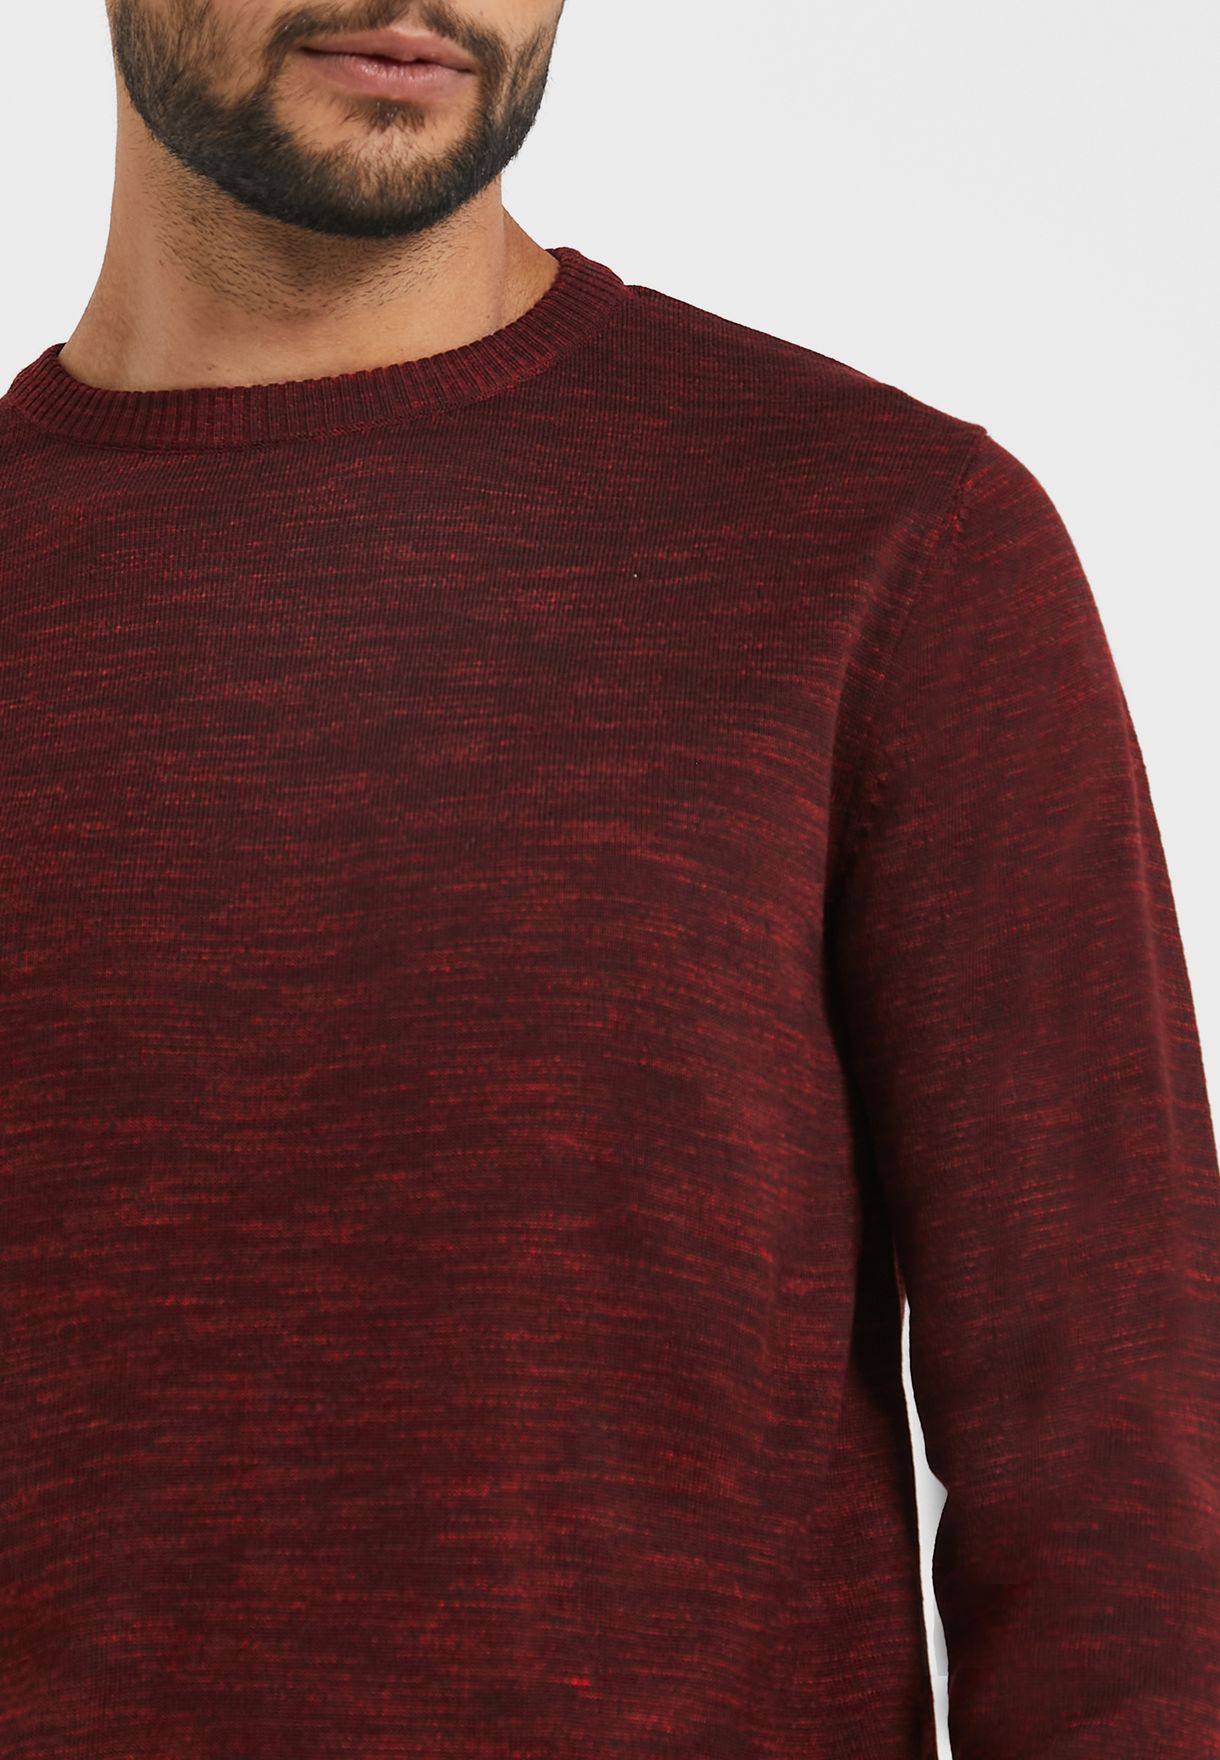 Texture Knit Crew Neck Sweater